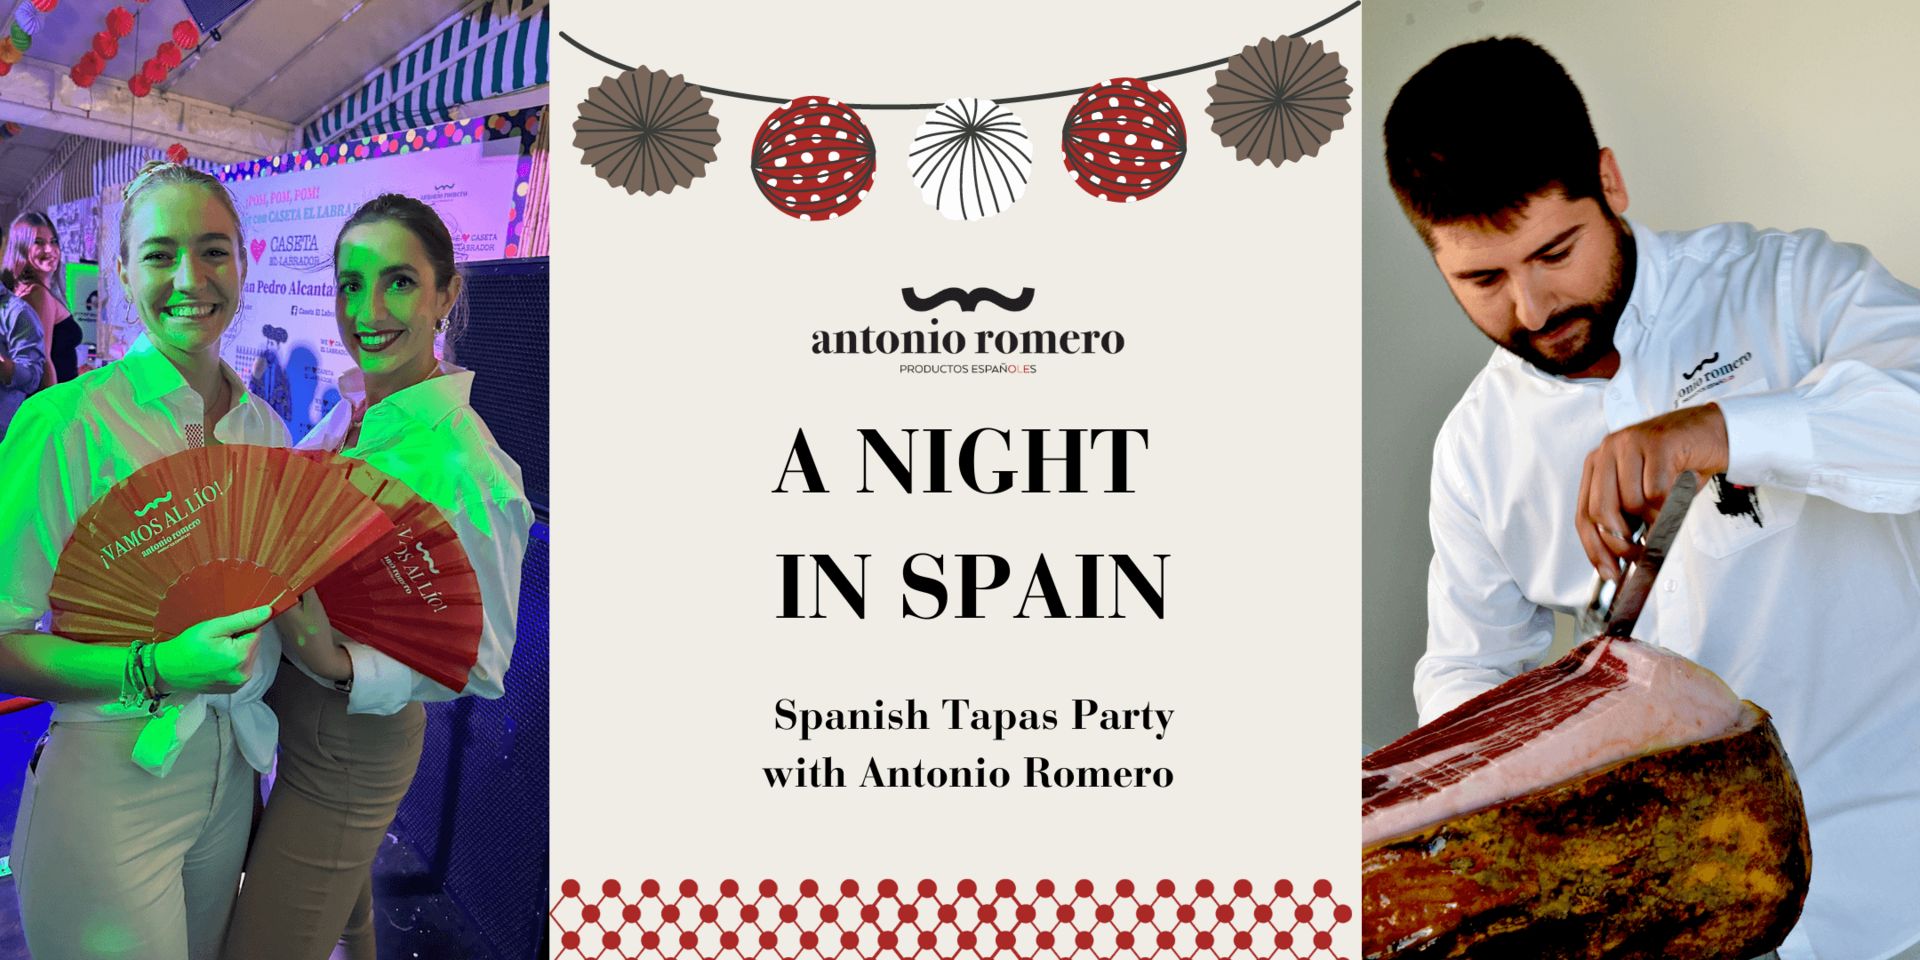 A Night in Spain: Spanish Tapas Party with Antonio Romero, Vancouver, British Columbia, Canada